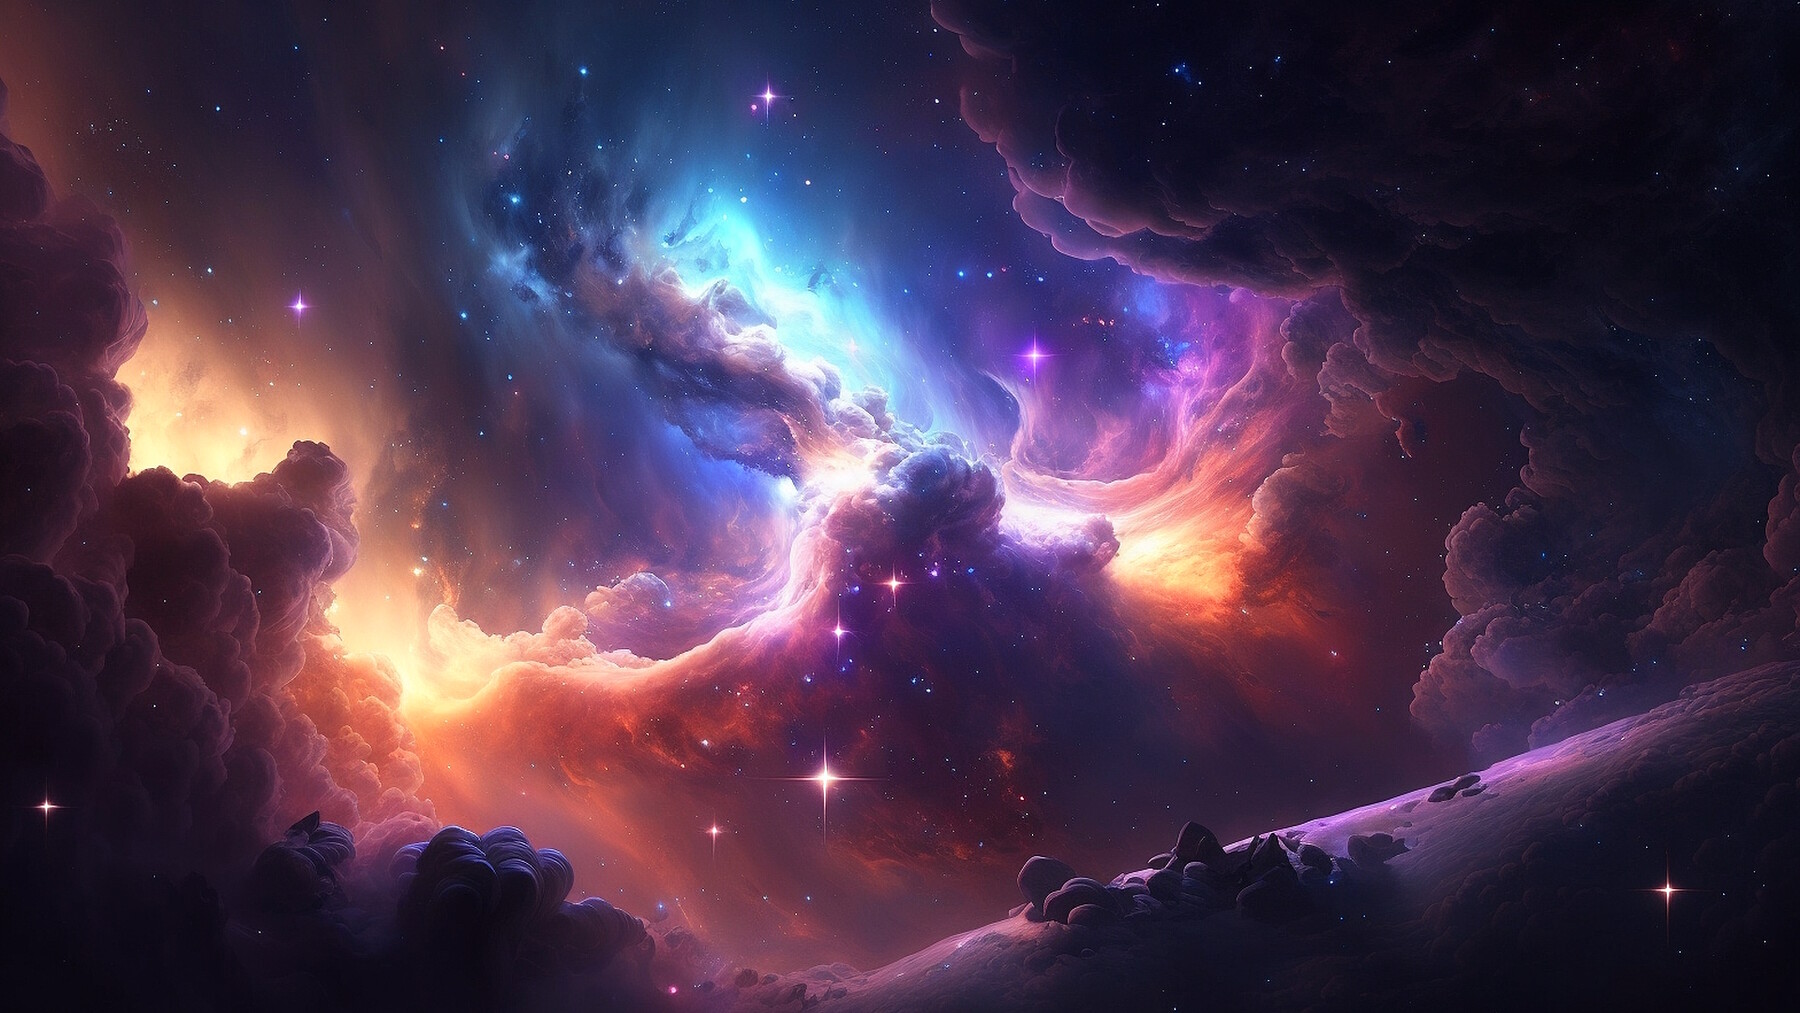 ArtStation - The scenes of galactic nebulae 50 vol. 2 | Artworks